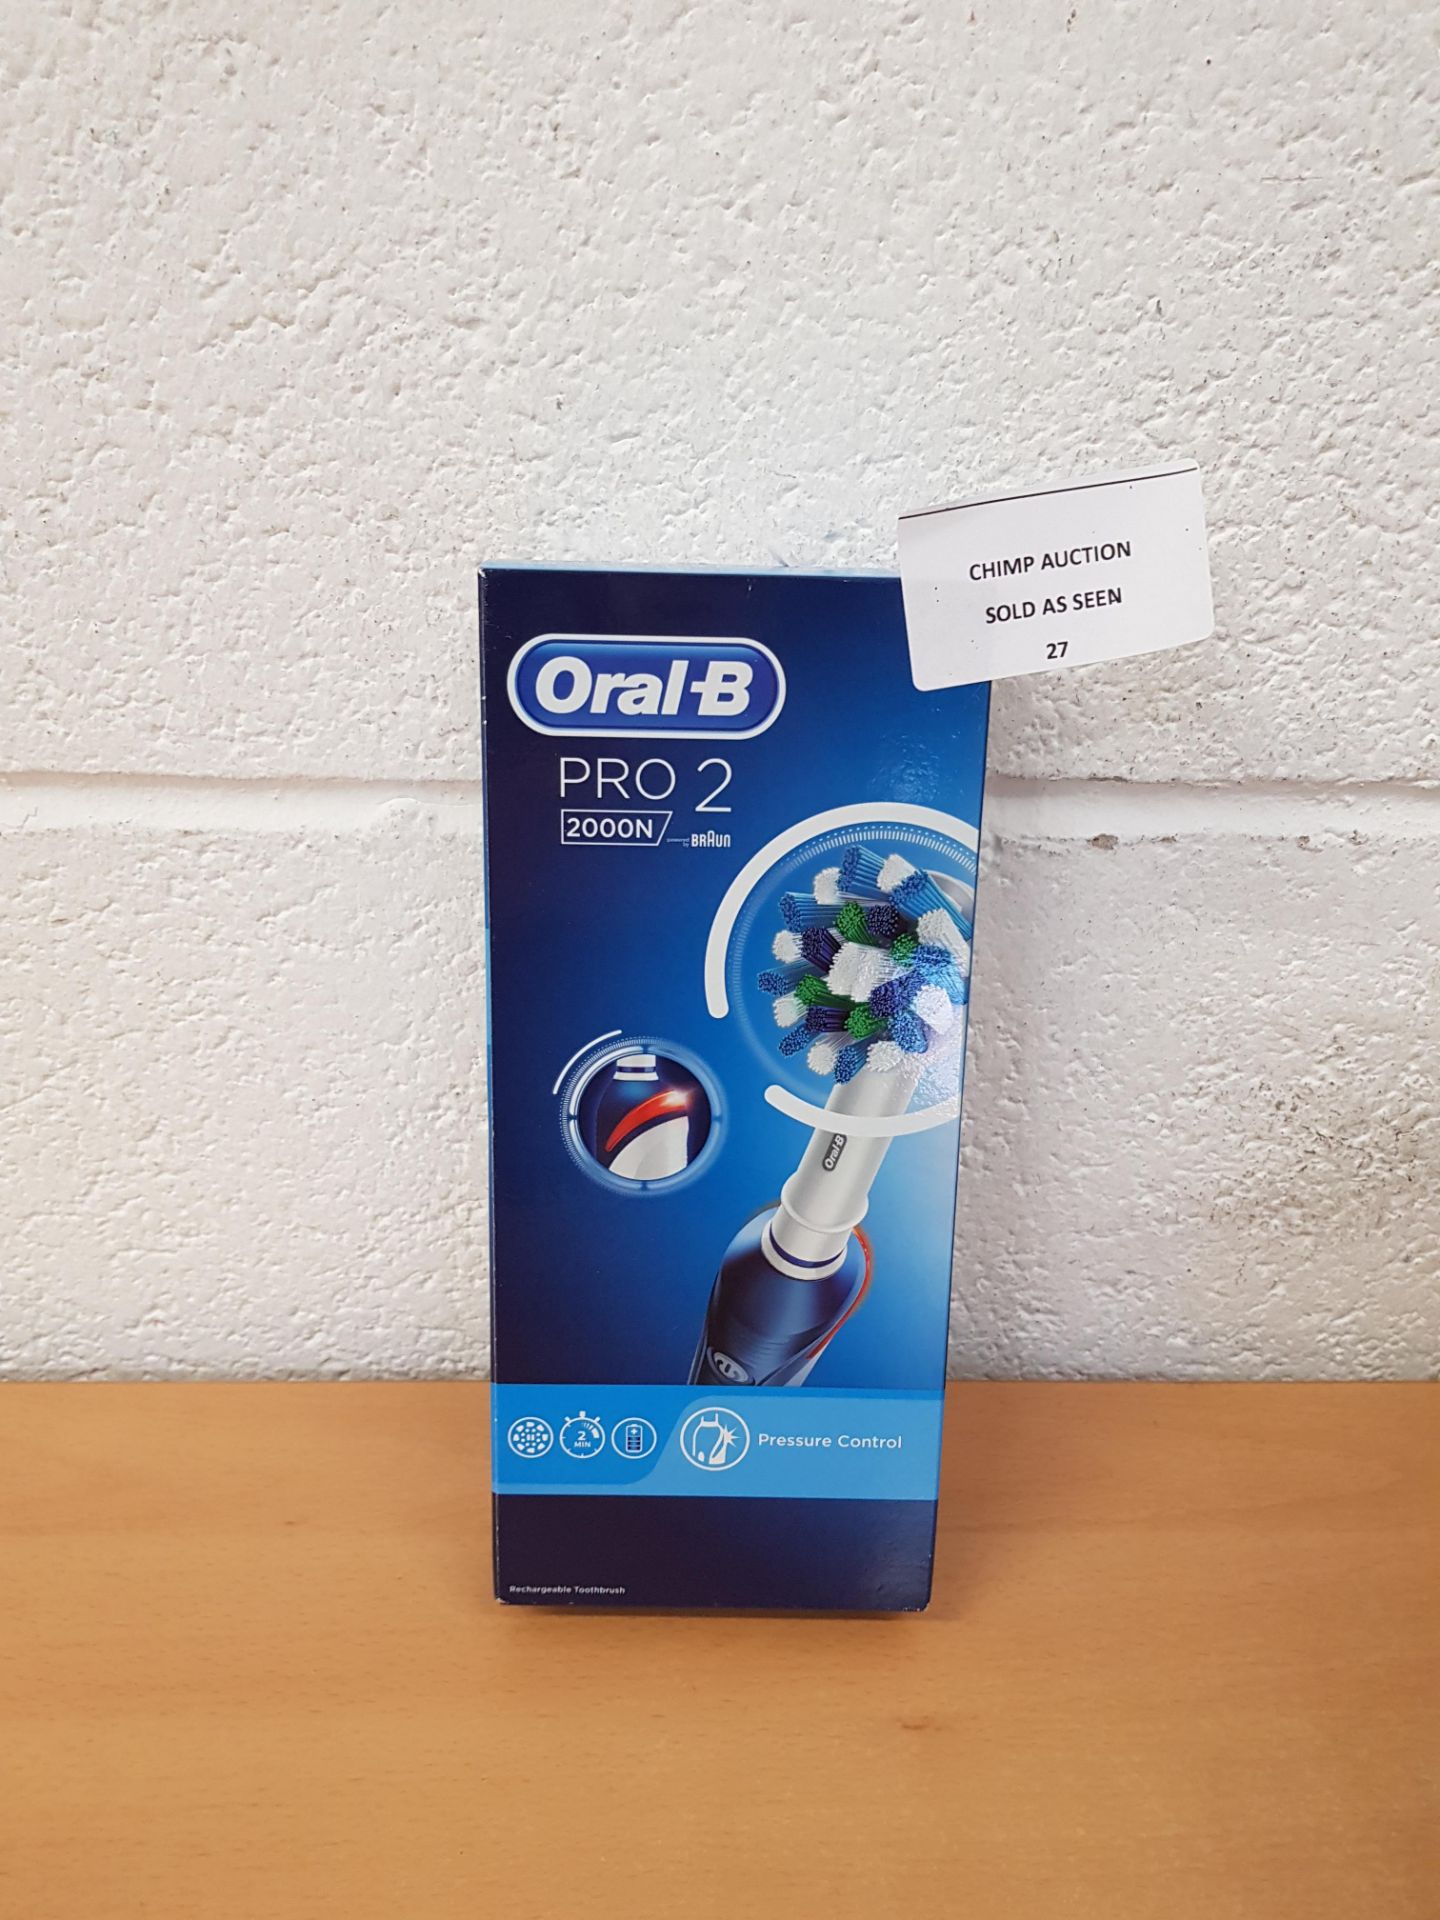 Oral-B Pro 2 2000 electric Toothbrush